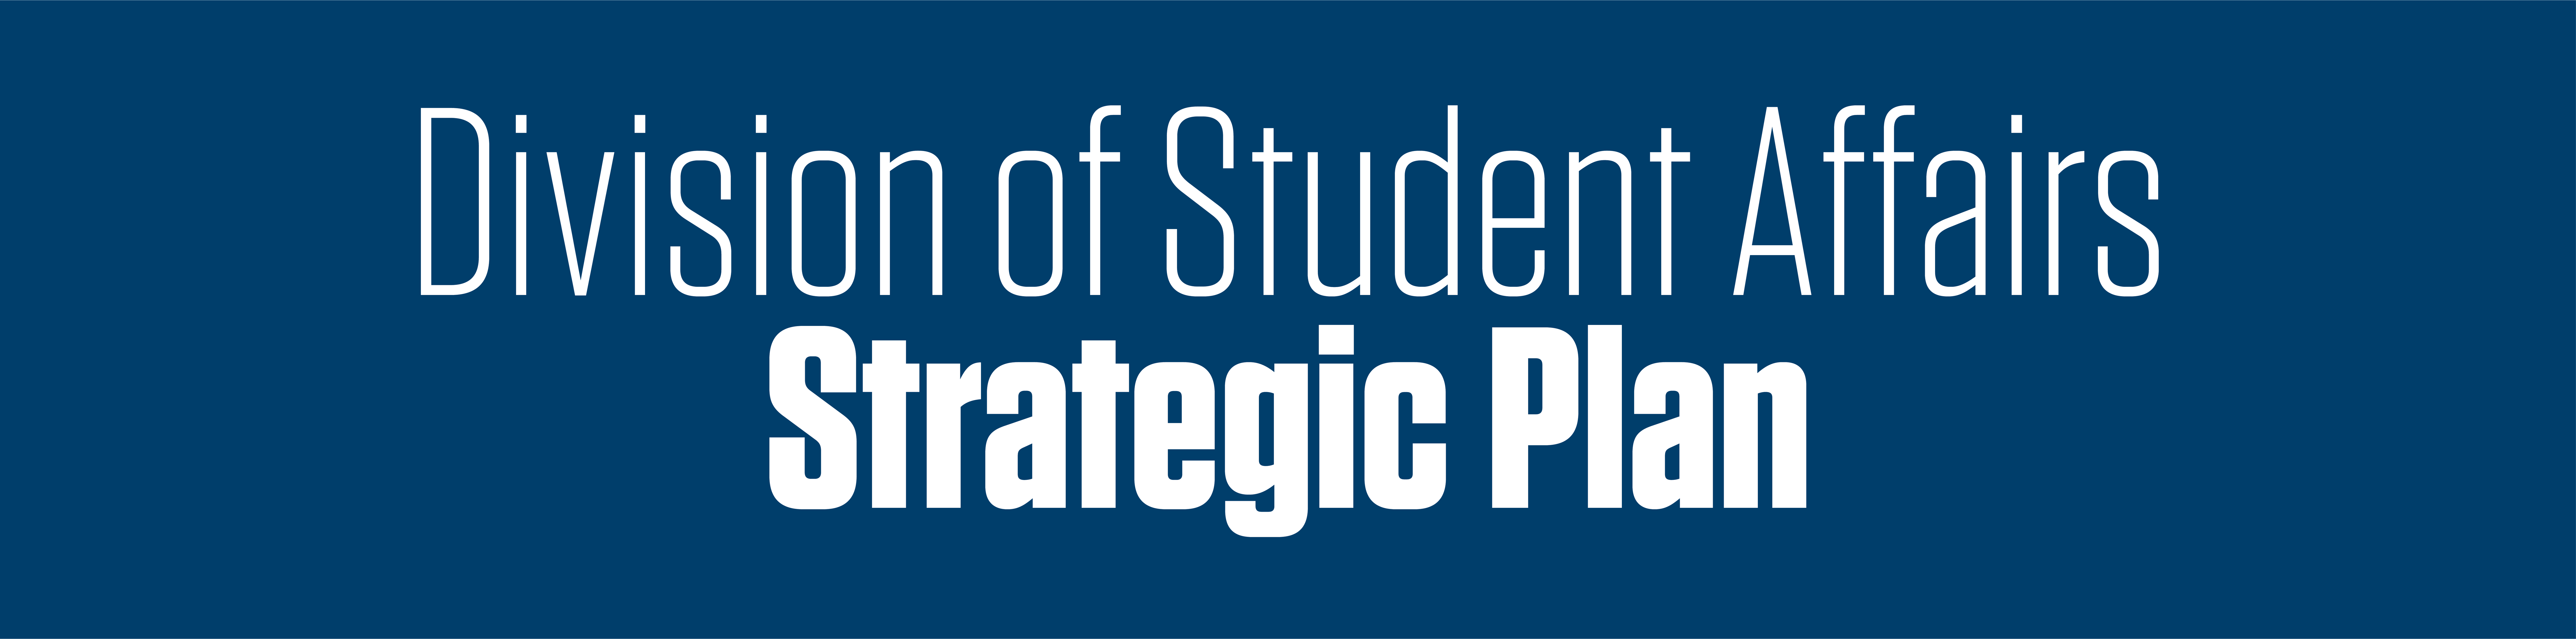 Division of Student Affairs Strategic Plan